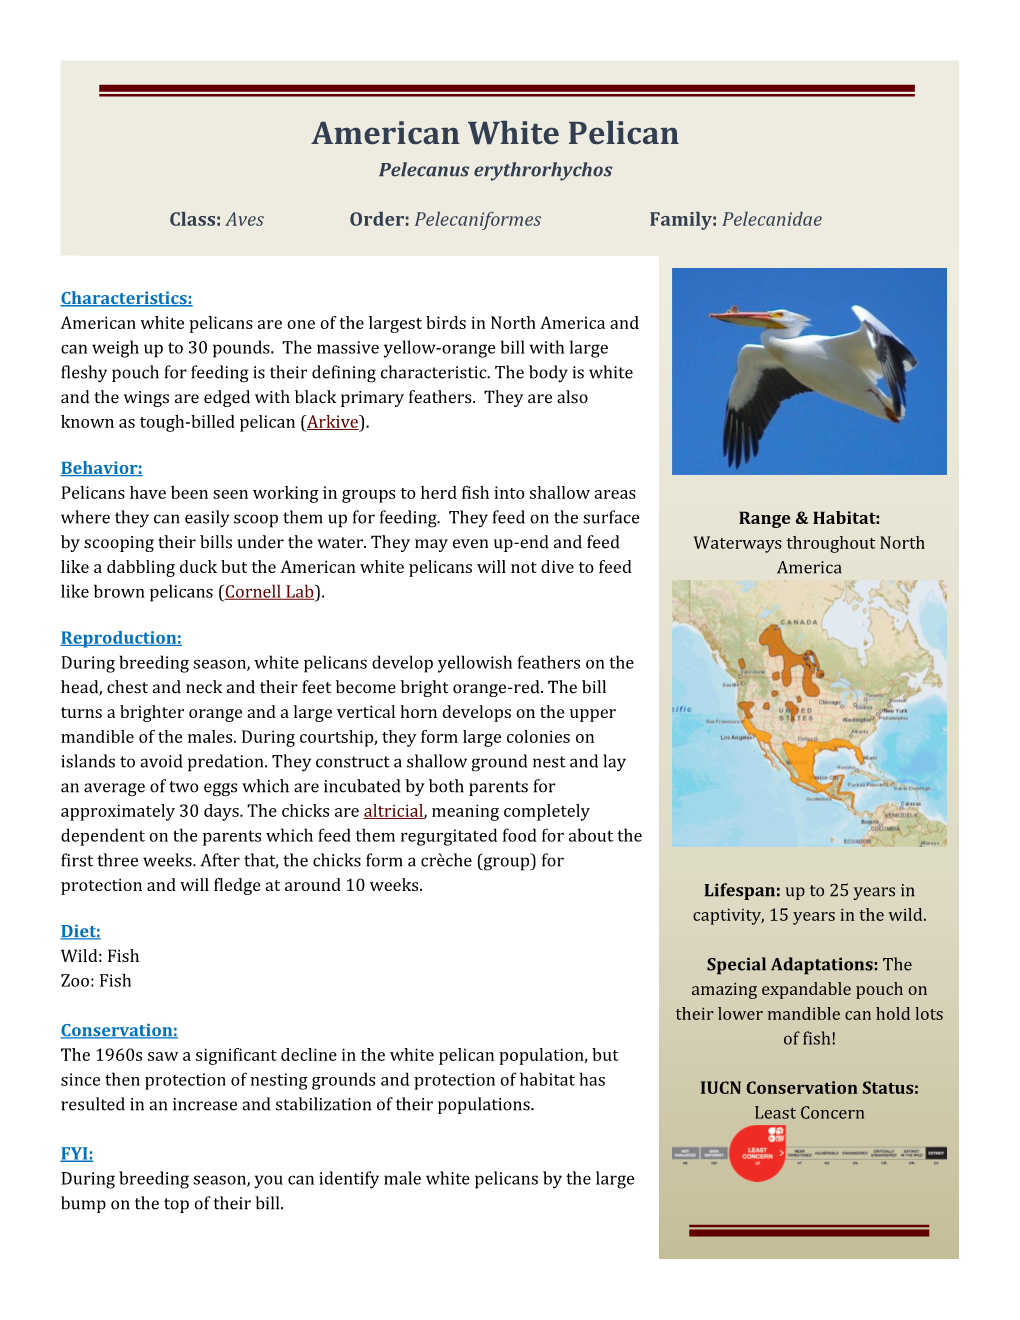 American White Pelican Pelecanus Erythrorhychos